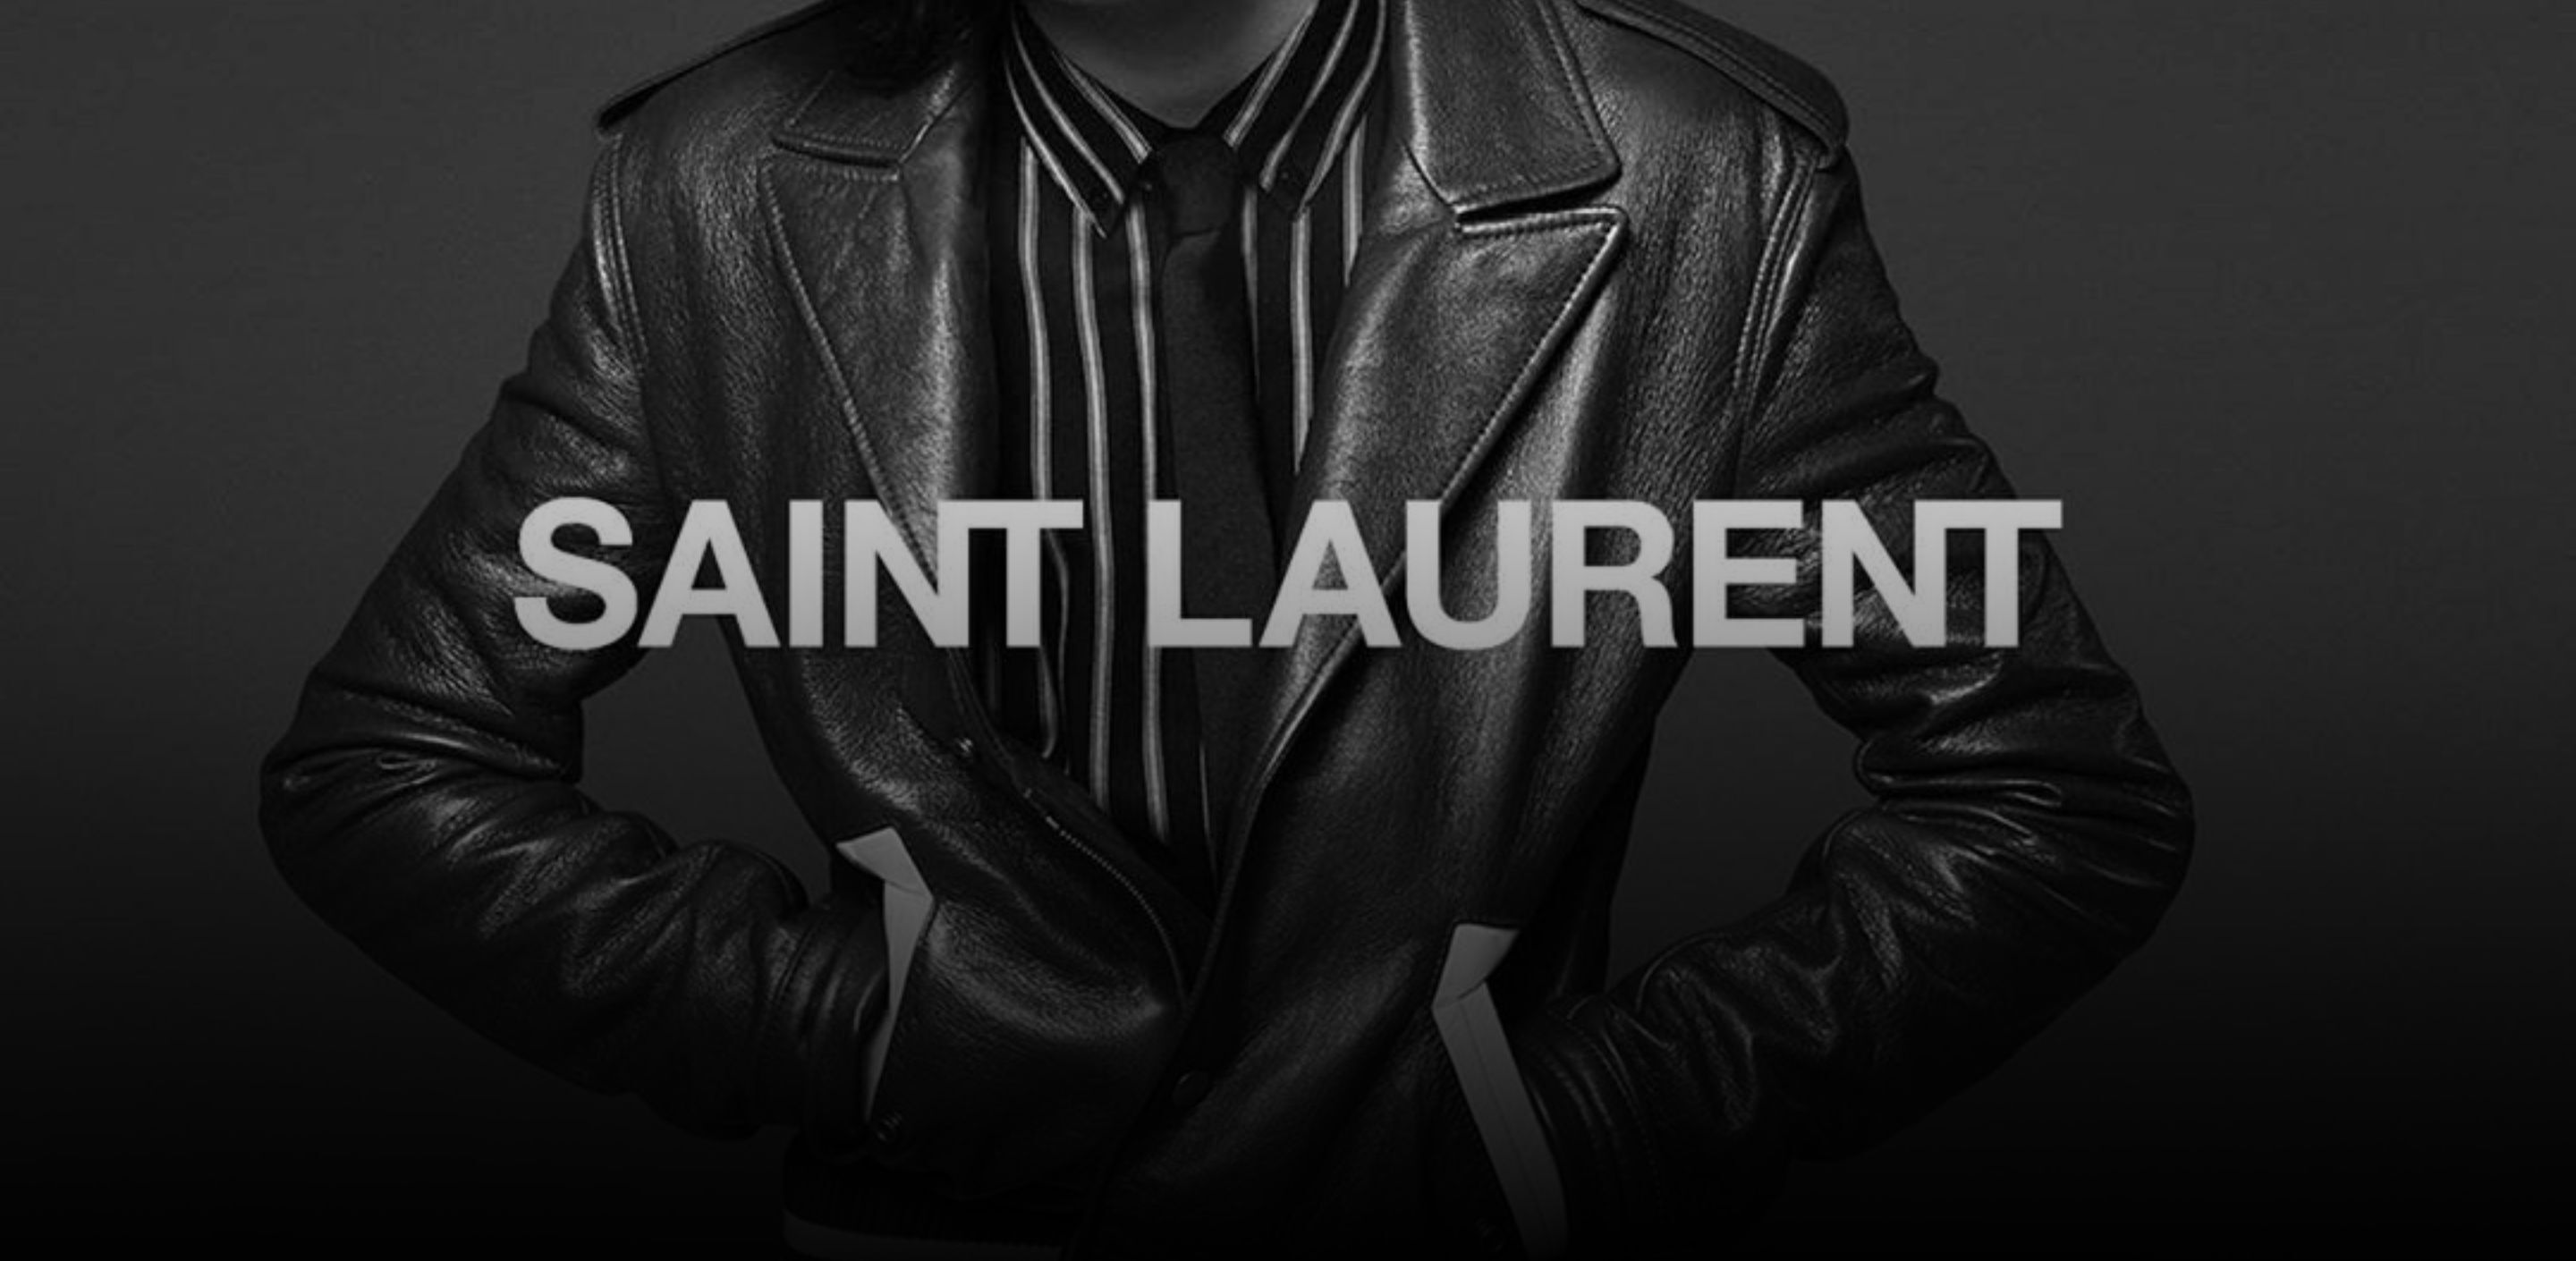 Feel The Luxury With Saint Laurent